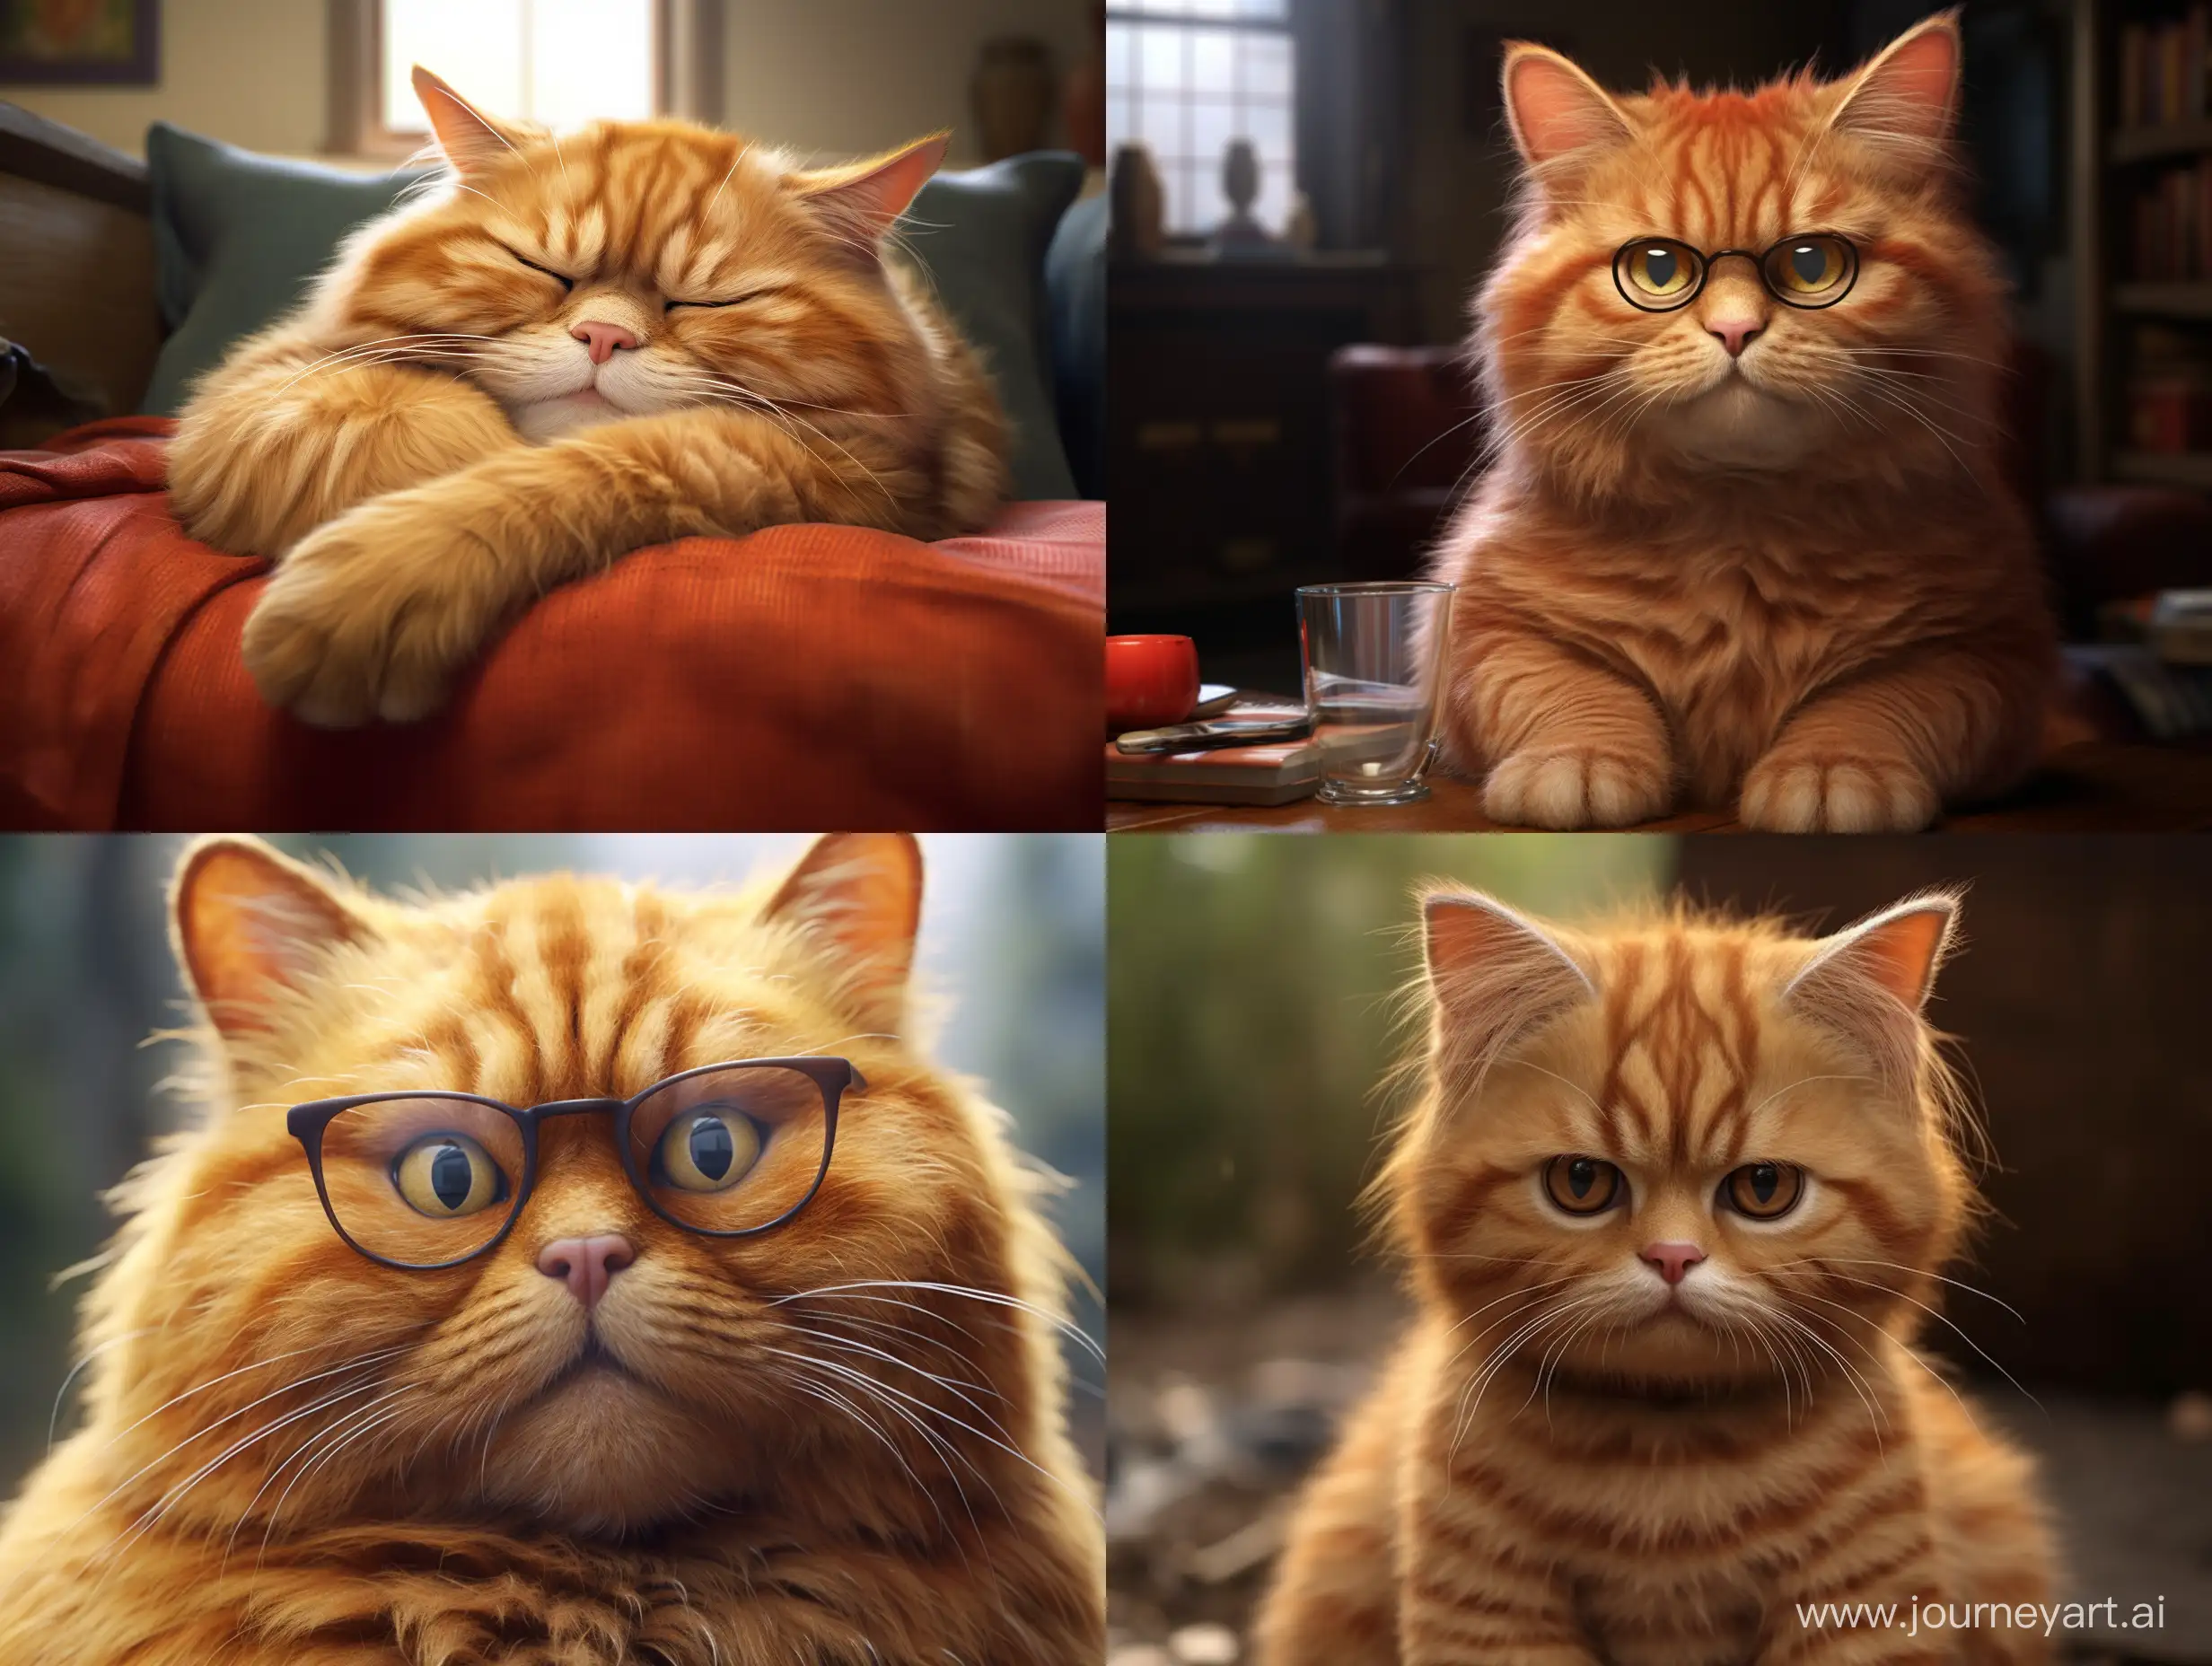 Super-Realistic-Garfield-Art-Charming-43-Aspect-Ratio-Cat-Illustration